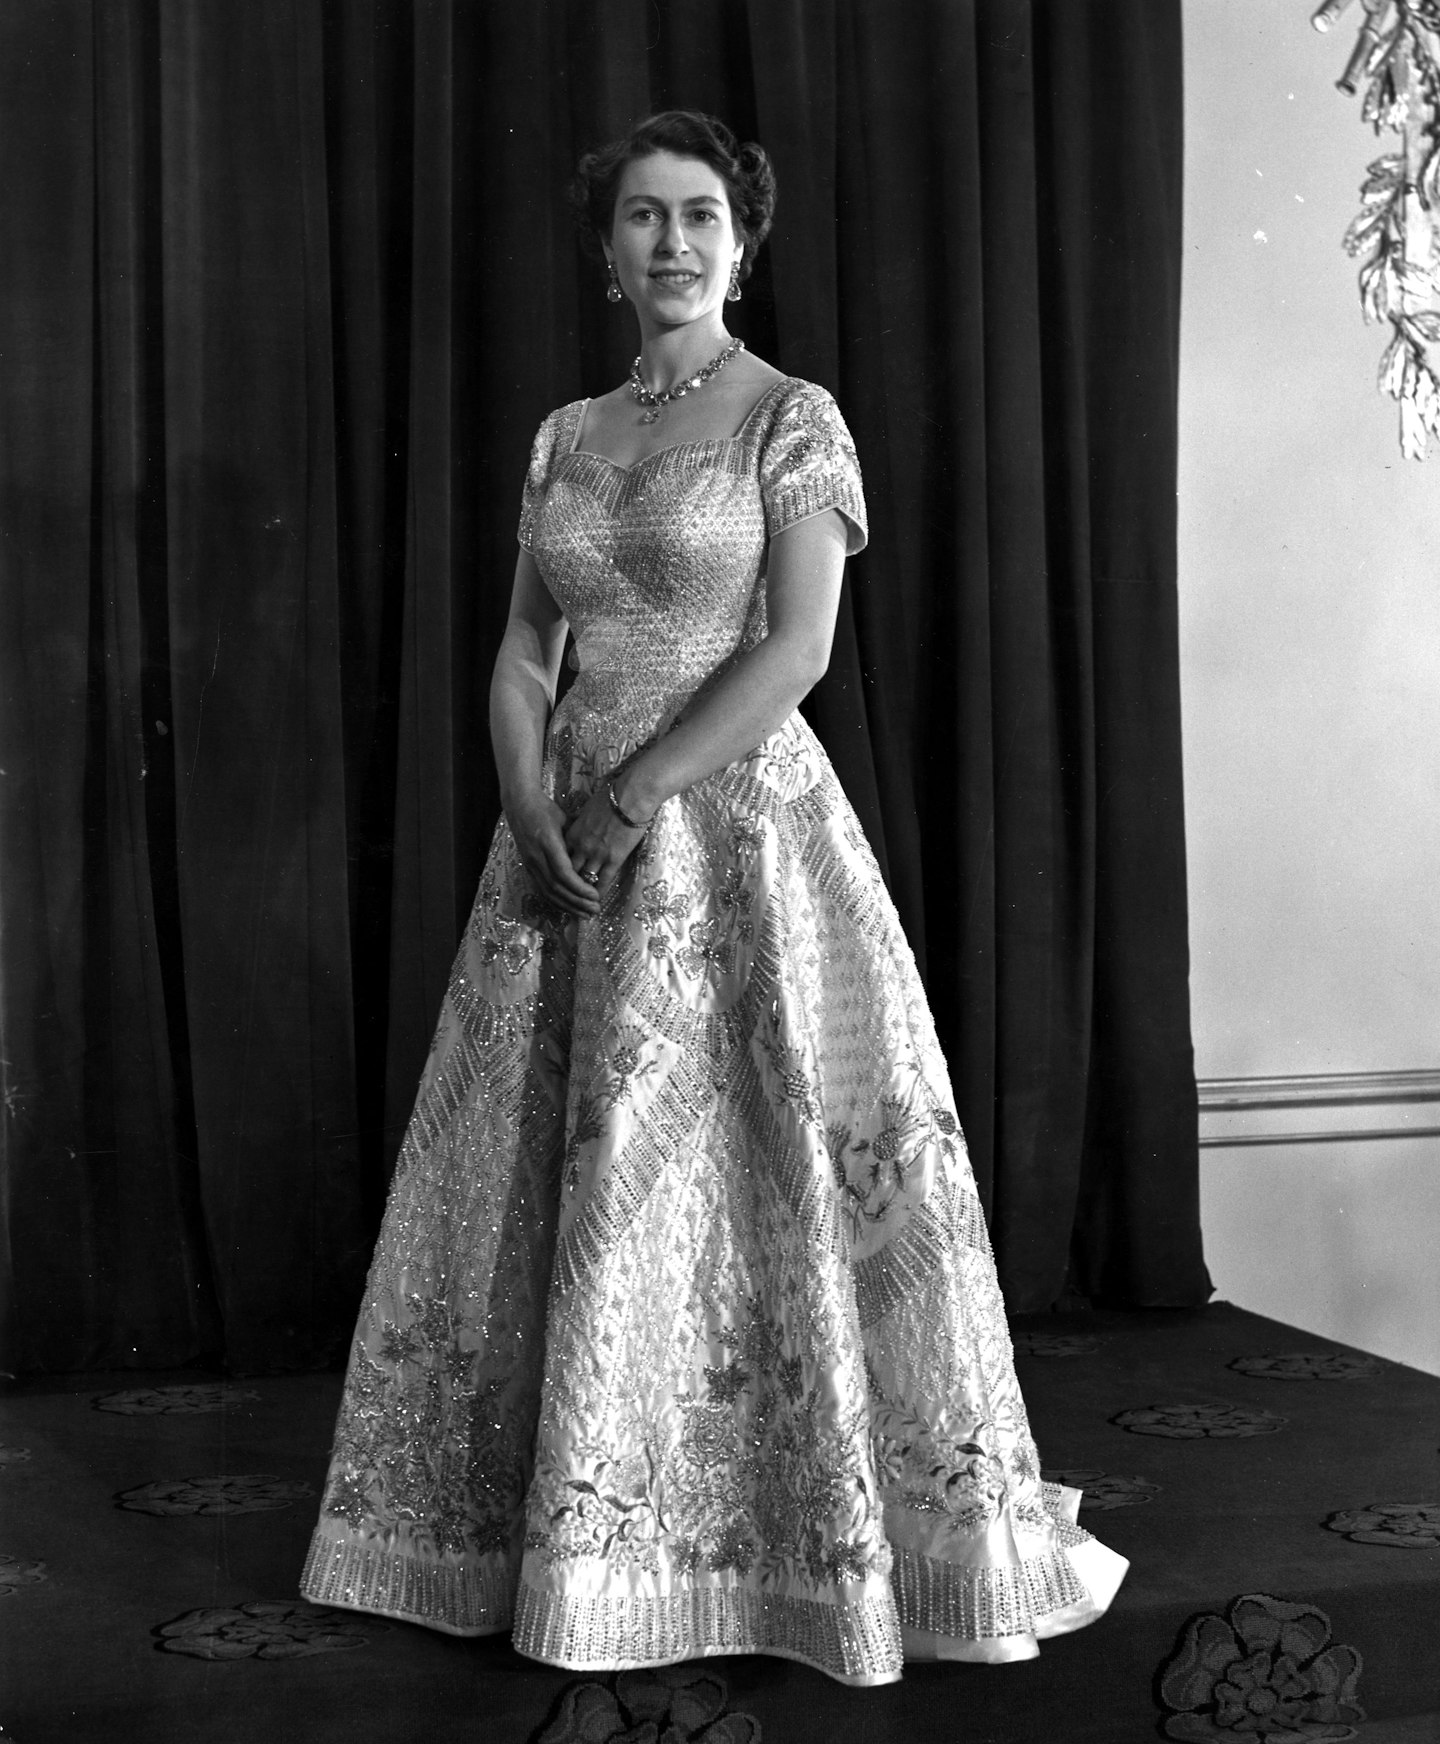 Queen Elizabeth Coronation dress